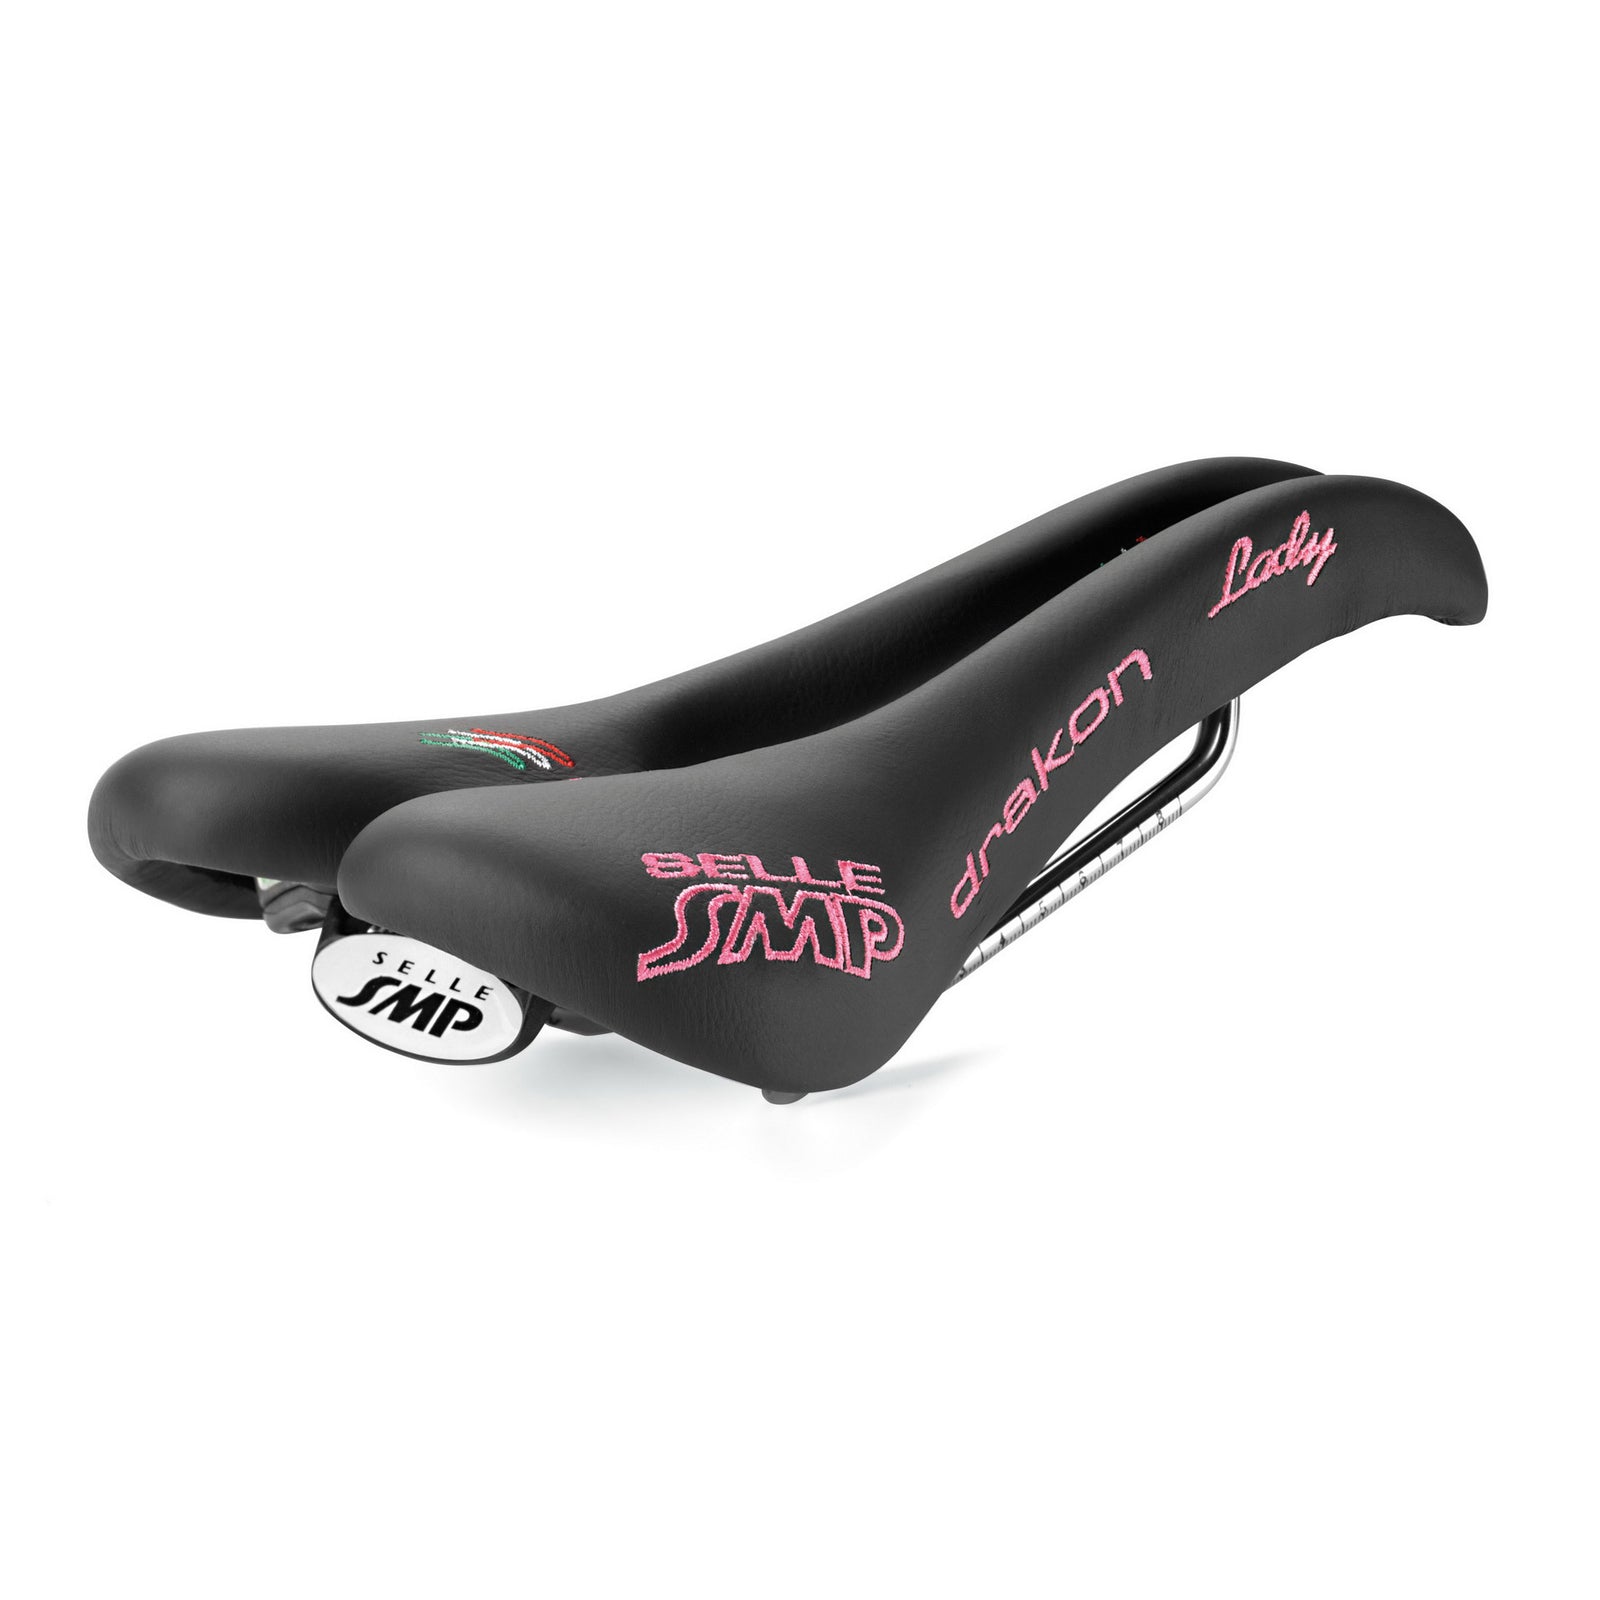 SMP saddle Pro Drakon Lady black 0301269